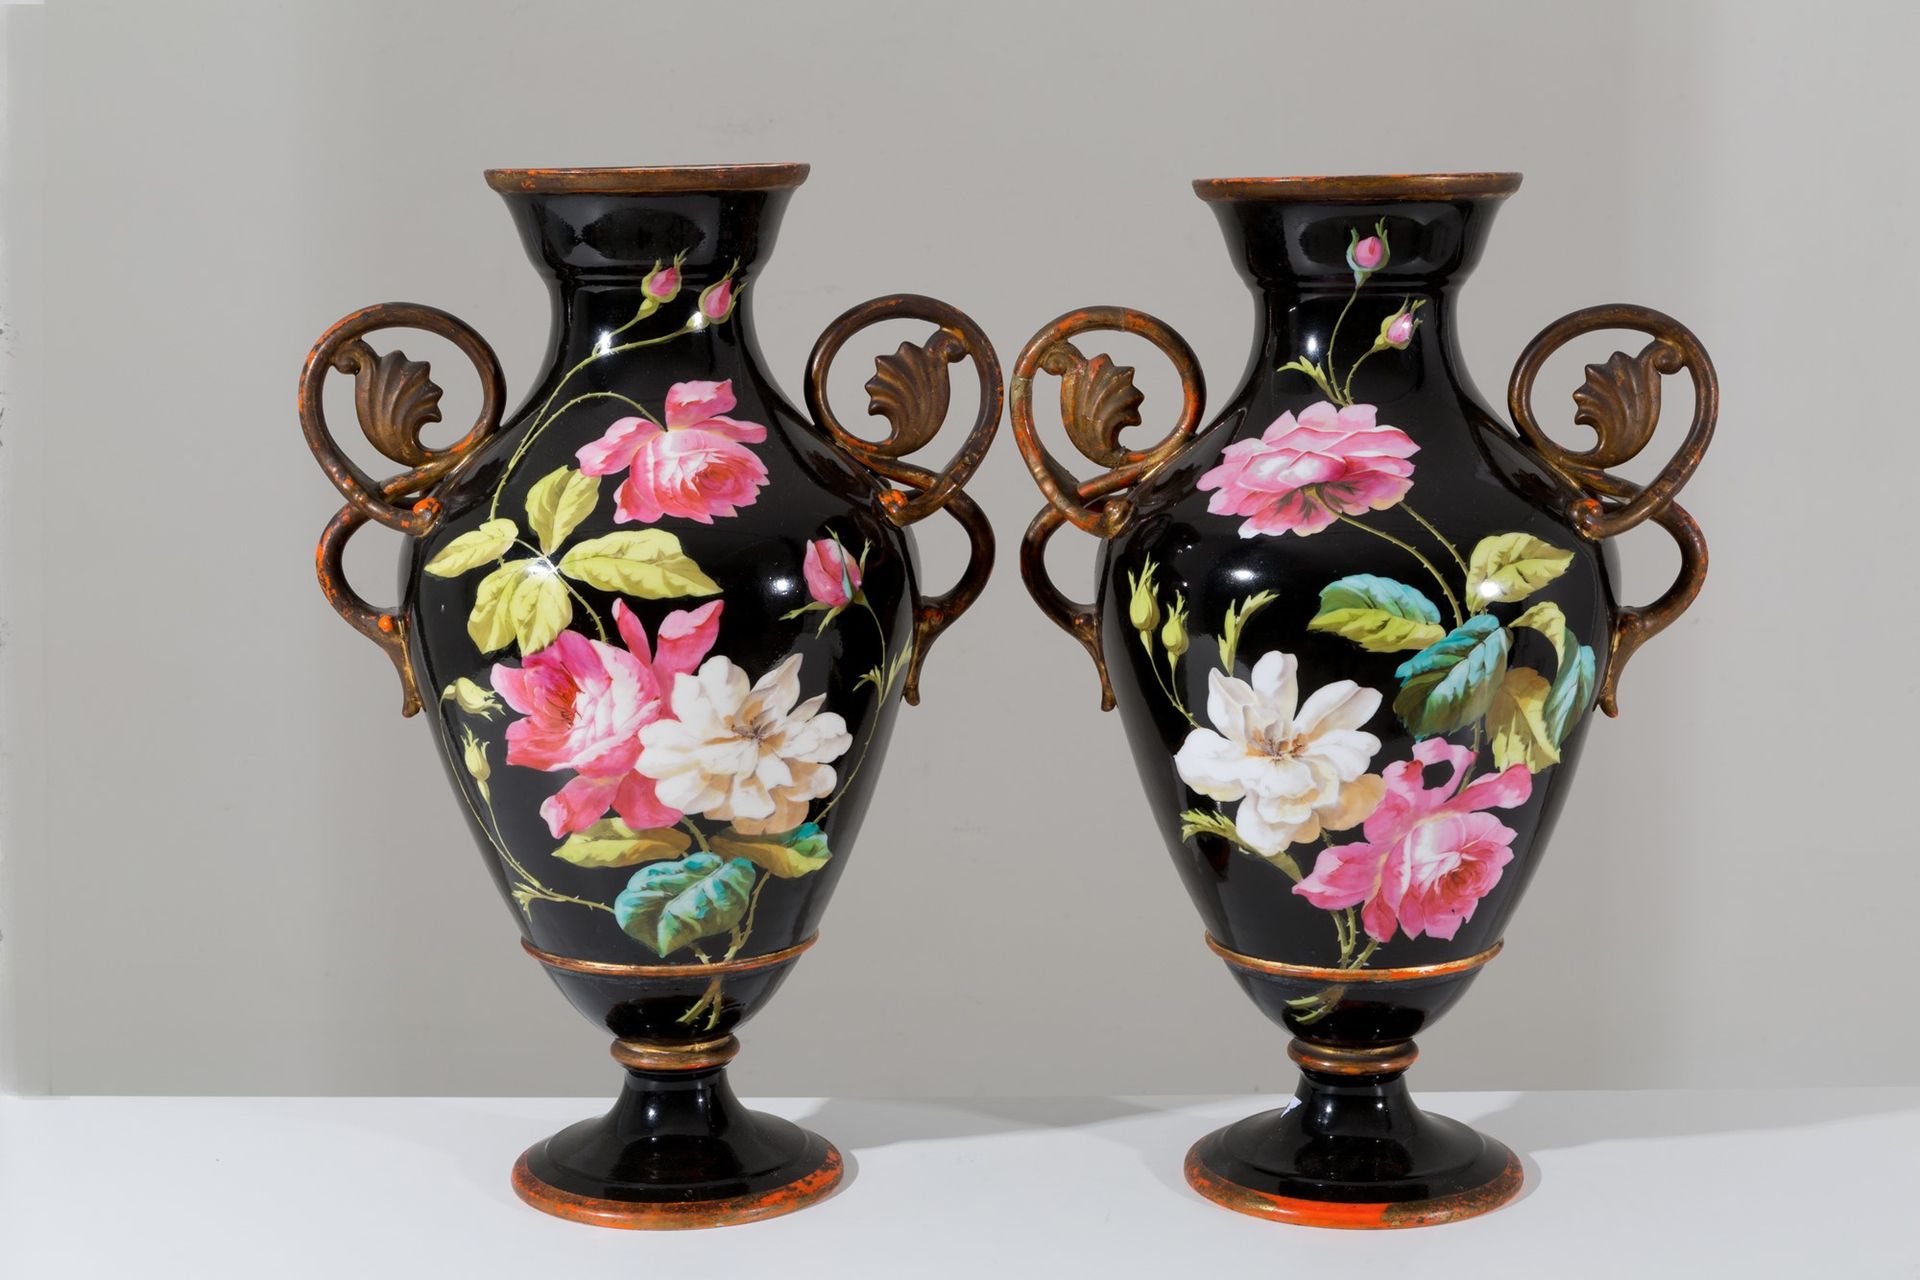 Pair of ceramic vases 一对黑地陶瓷花瓶，上面绘有花卉图案。20世纪初。缺陷。高约53厘米。